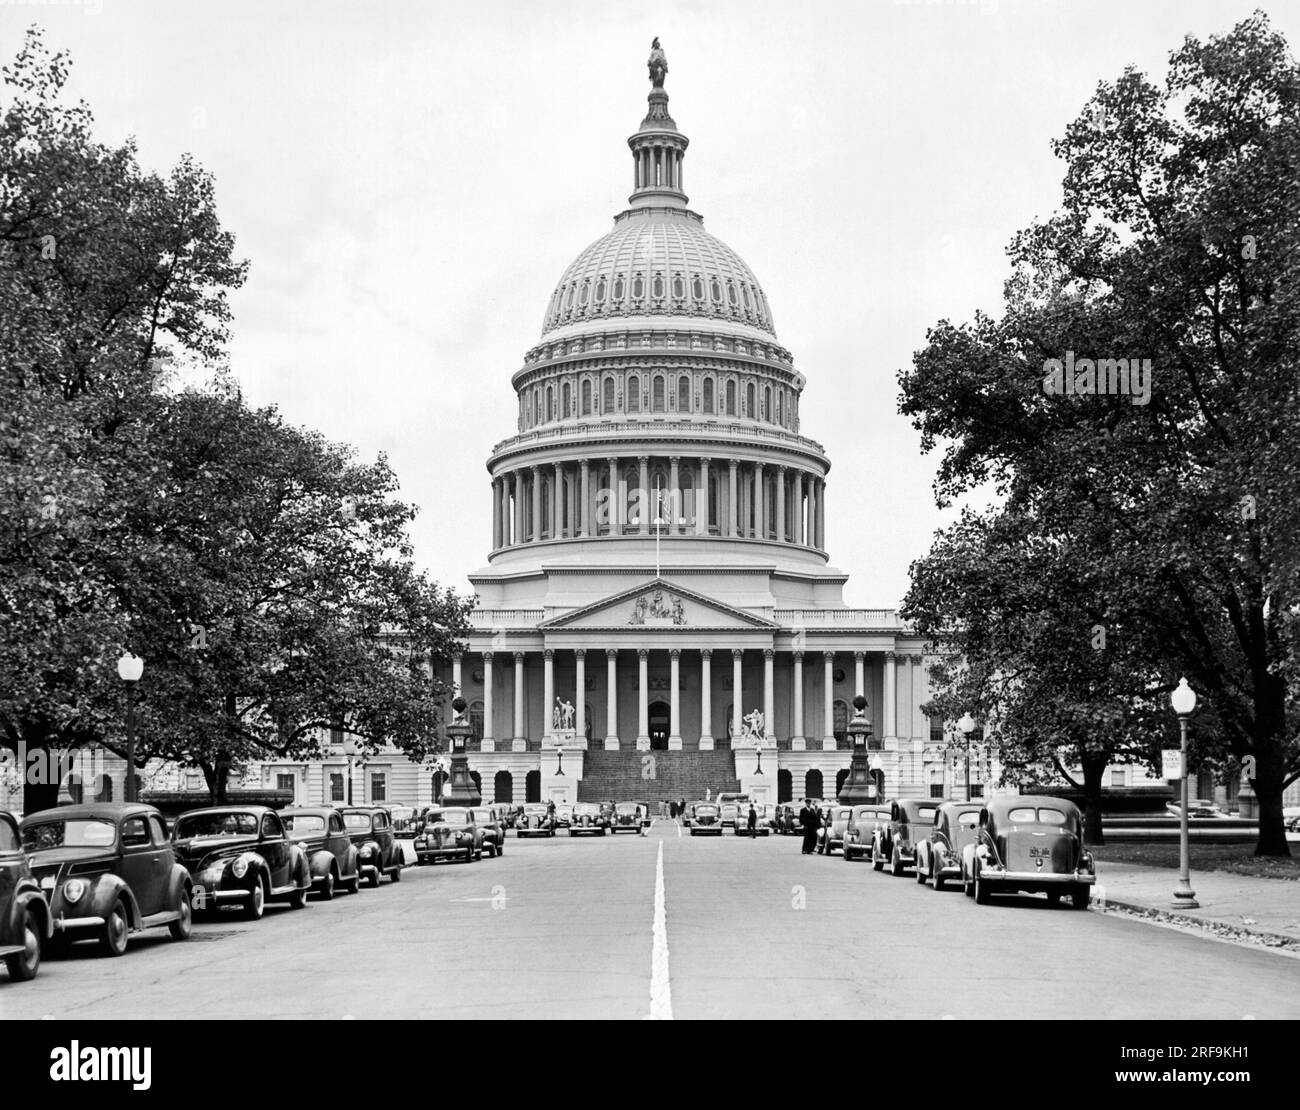 Washington, D.C.:  c. 1940. The Capitol Building in Washington, D.C. Stock Photo